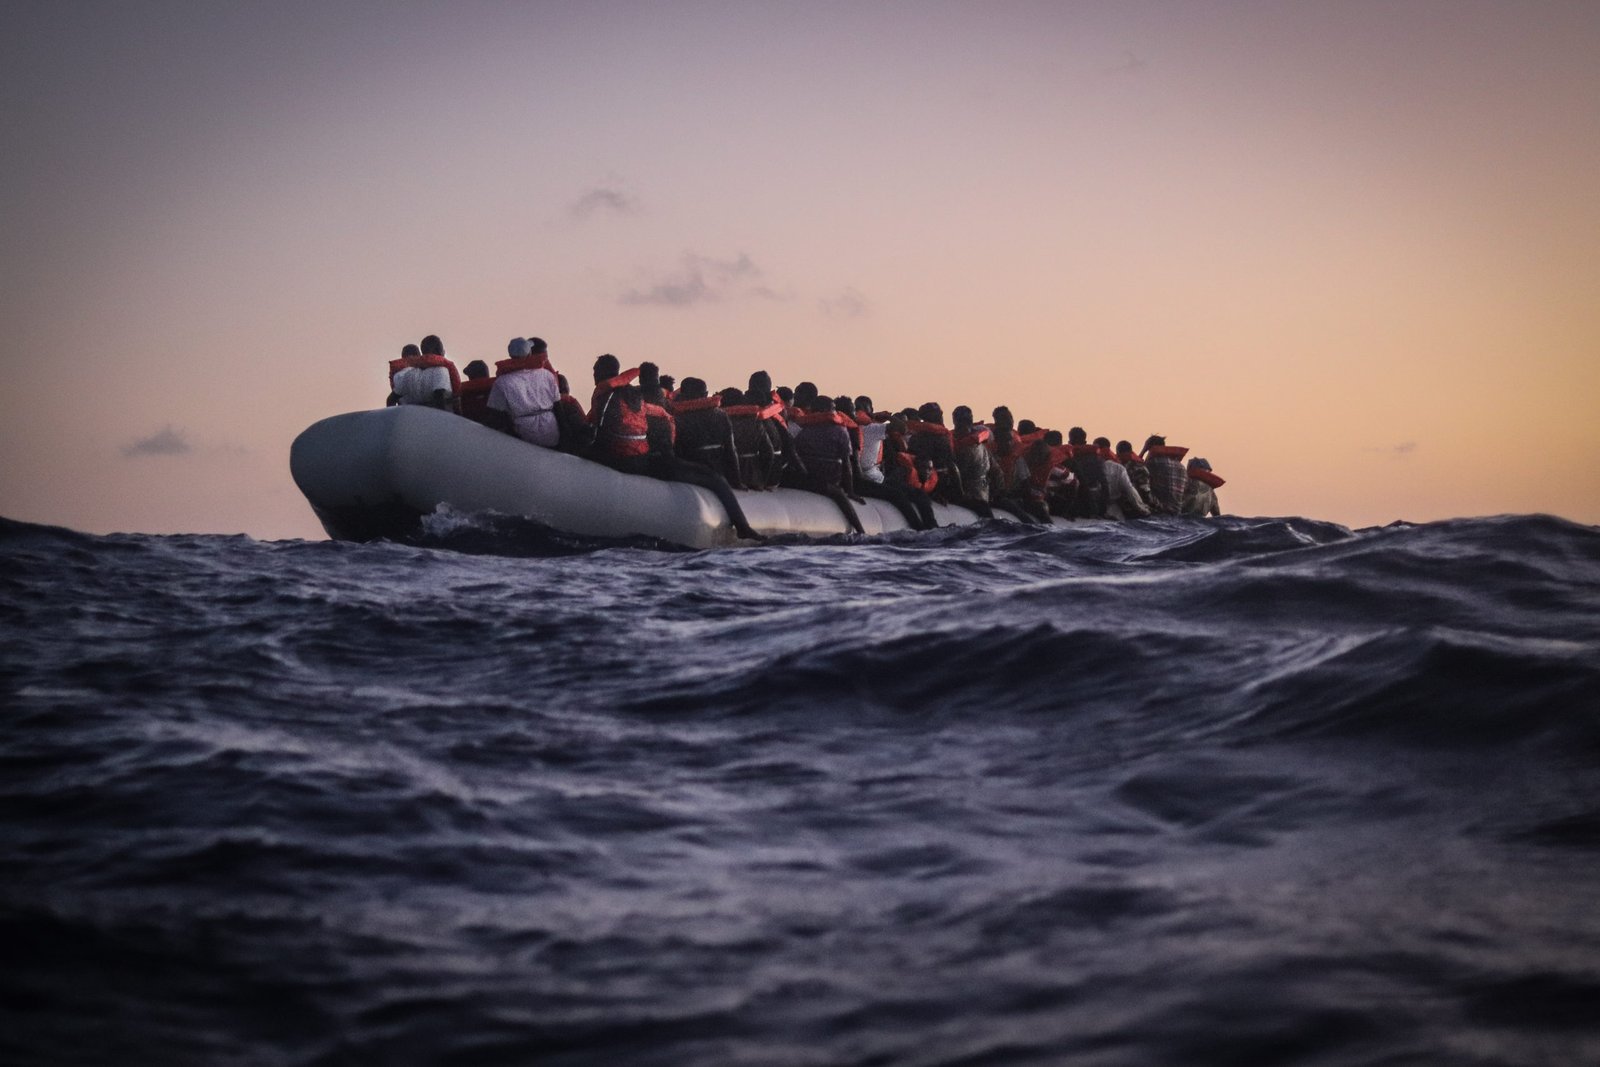 Agosto de 2020, o navio Sea-Watch 4 resgata centenas de pessoas que tentavam atravessar o Mediterrâneo. Crédito: Sea MSF, Hannah Wallace Bowman